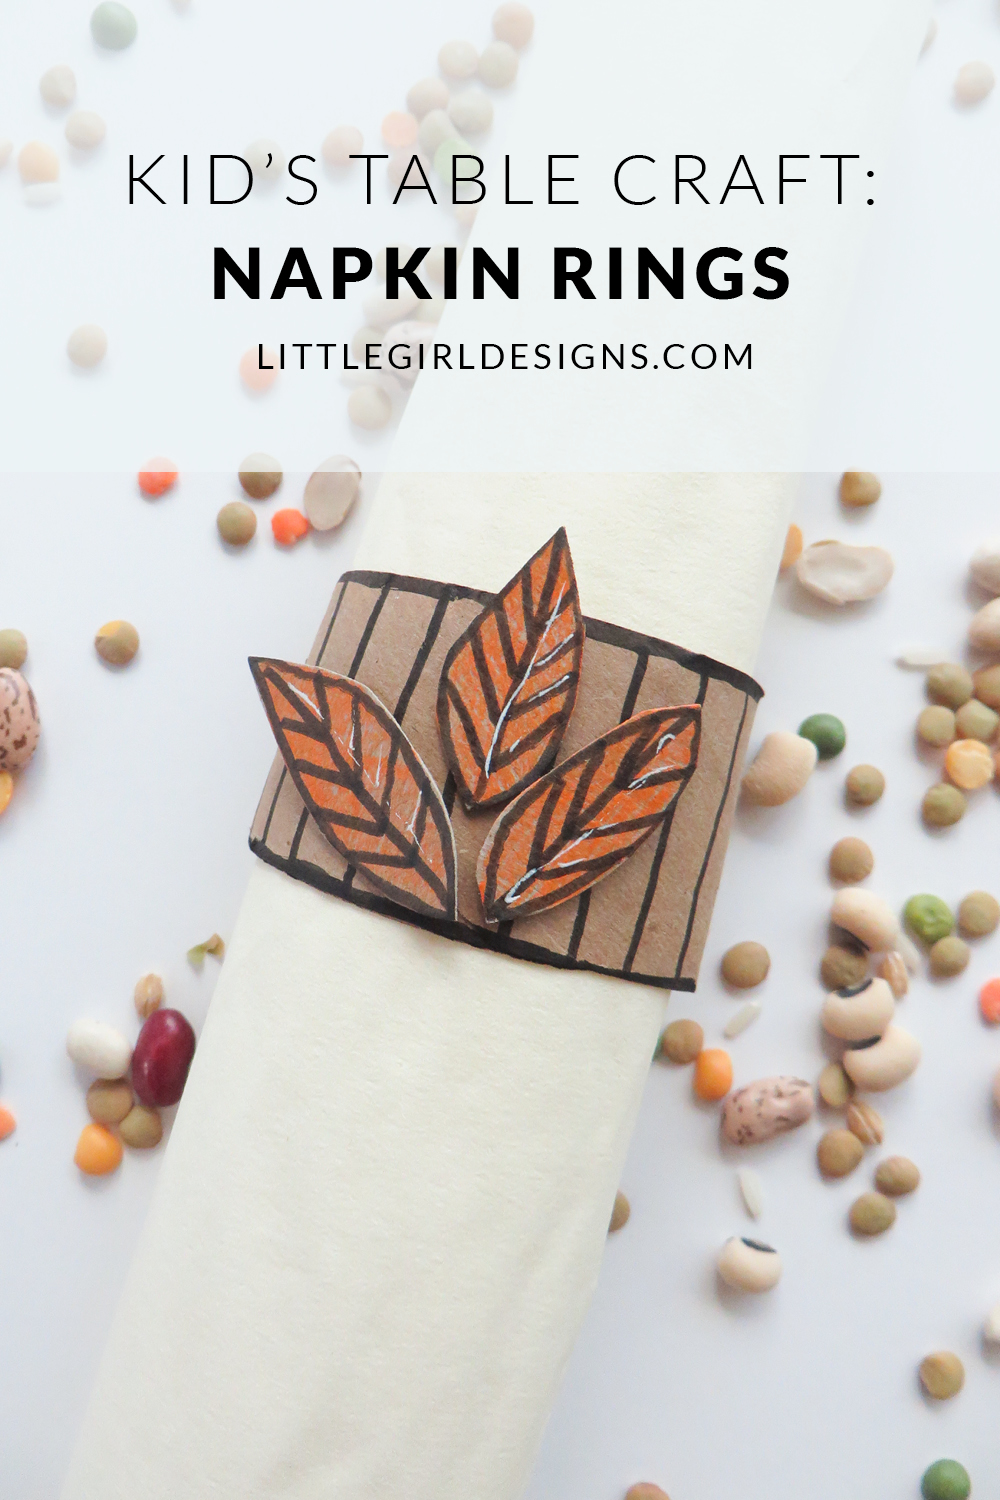 Kid’s Table Craft: Napkin Rings